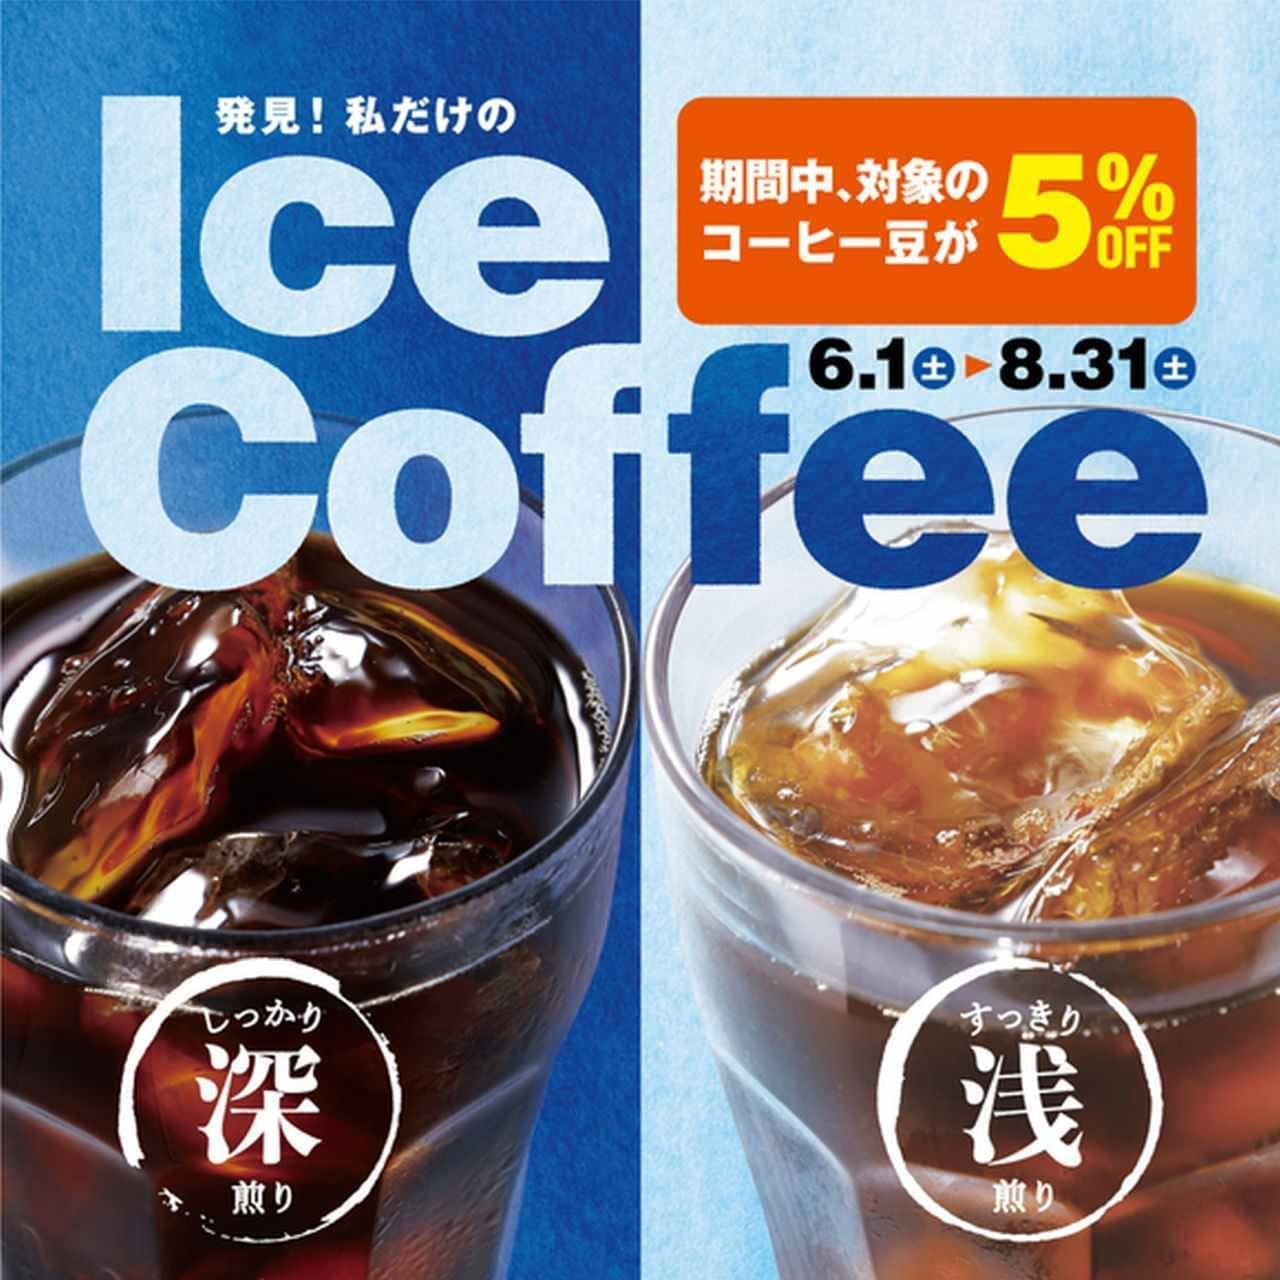 KALDI "Ice Coffee Campaign"